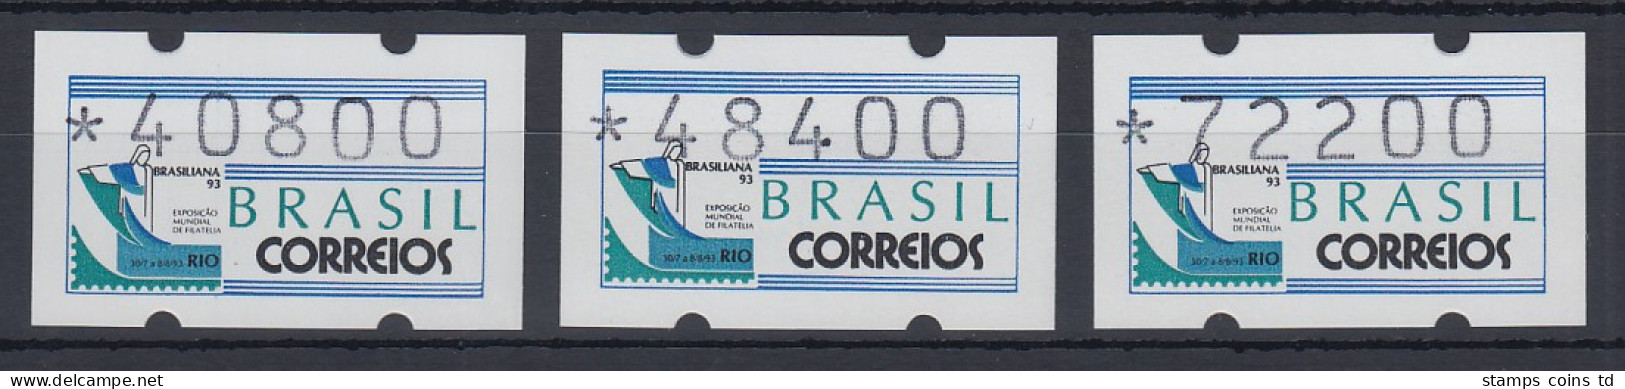 Brasilien Klüssendorf-ATM 1993 BRASILIANA Mi-Nr 5 Satz 40800 - 48400 - 72200 ** - Affrancature Meccaniche/Frama